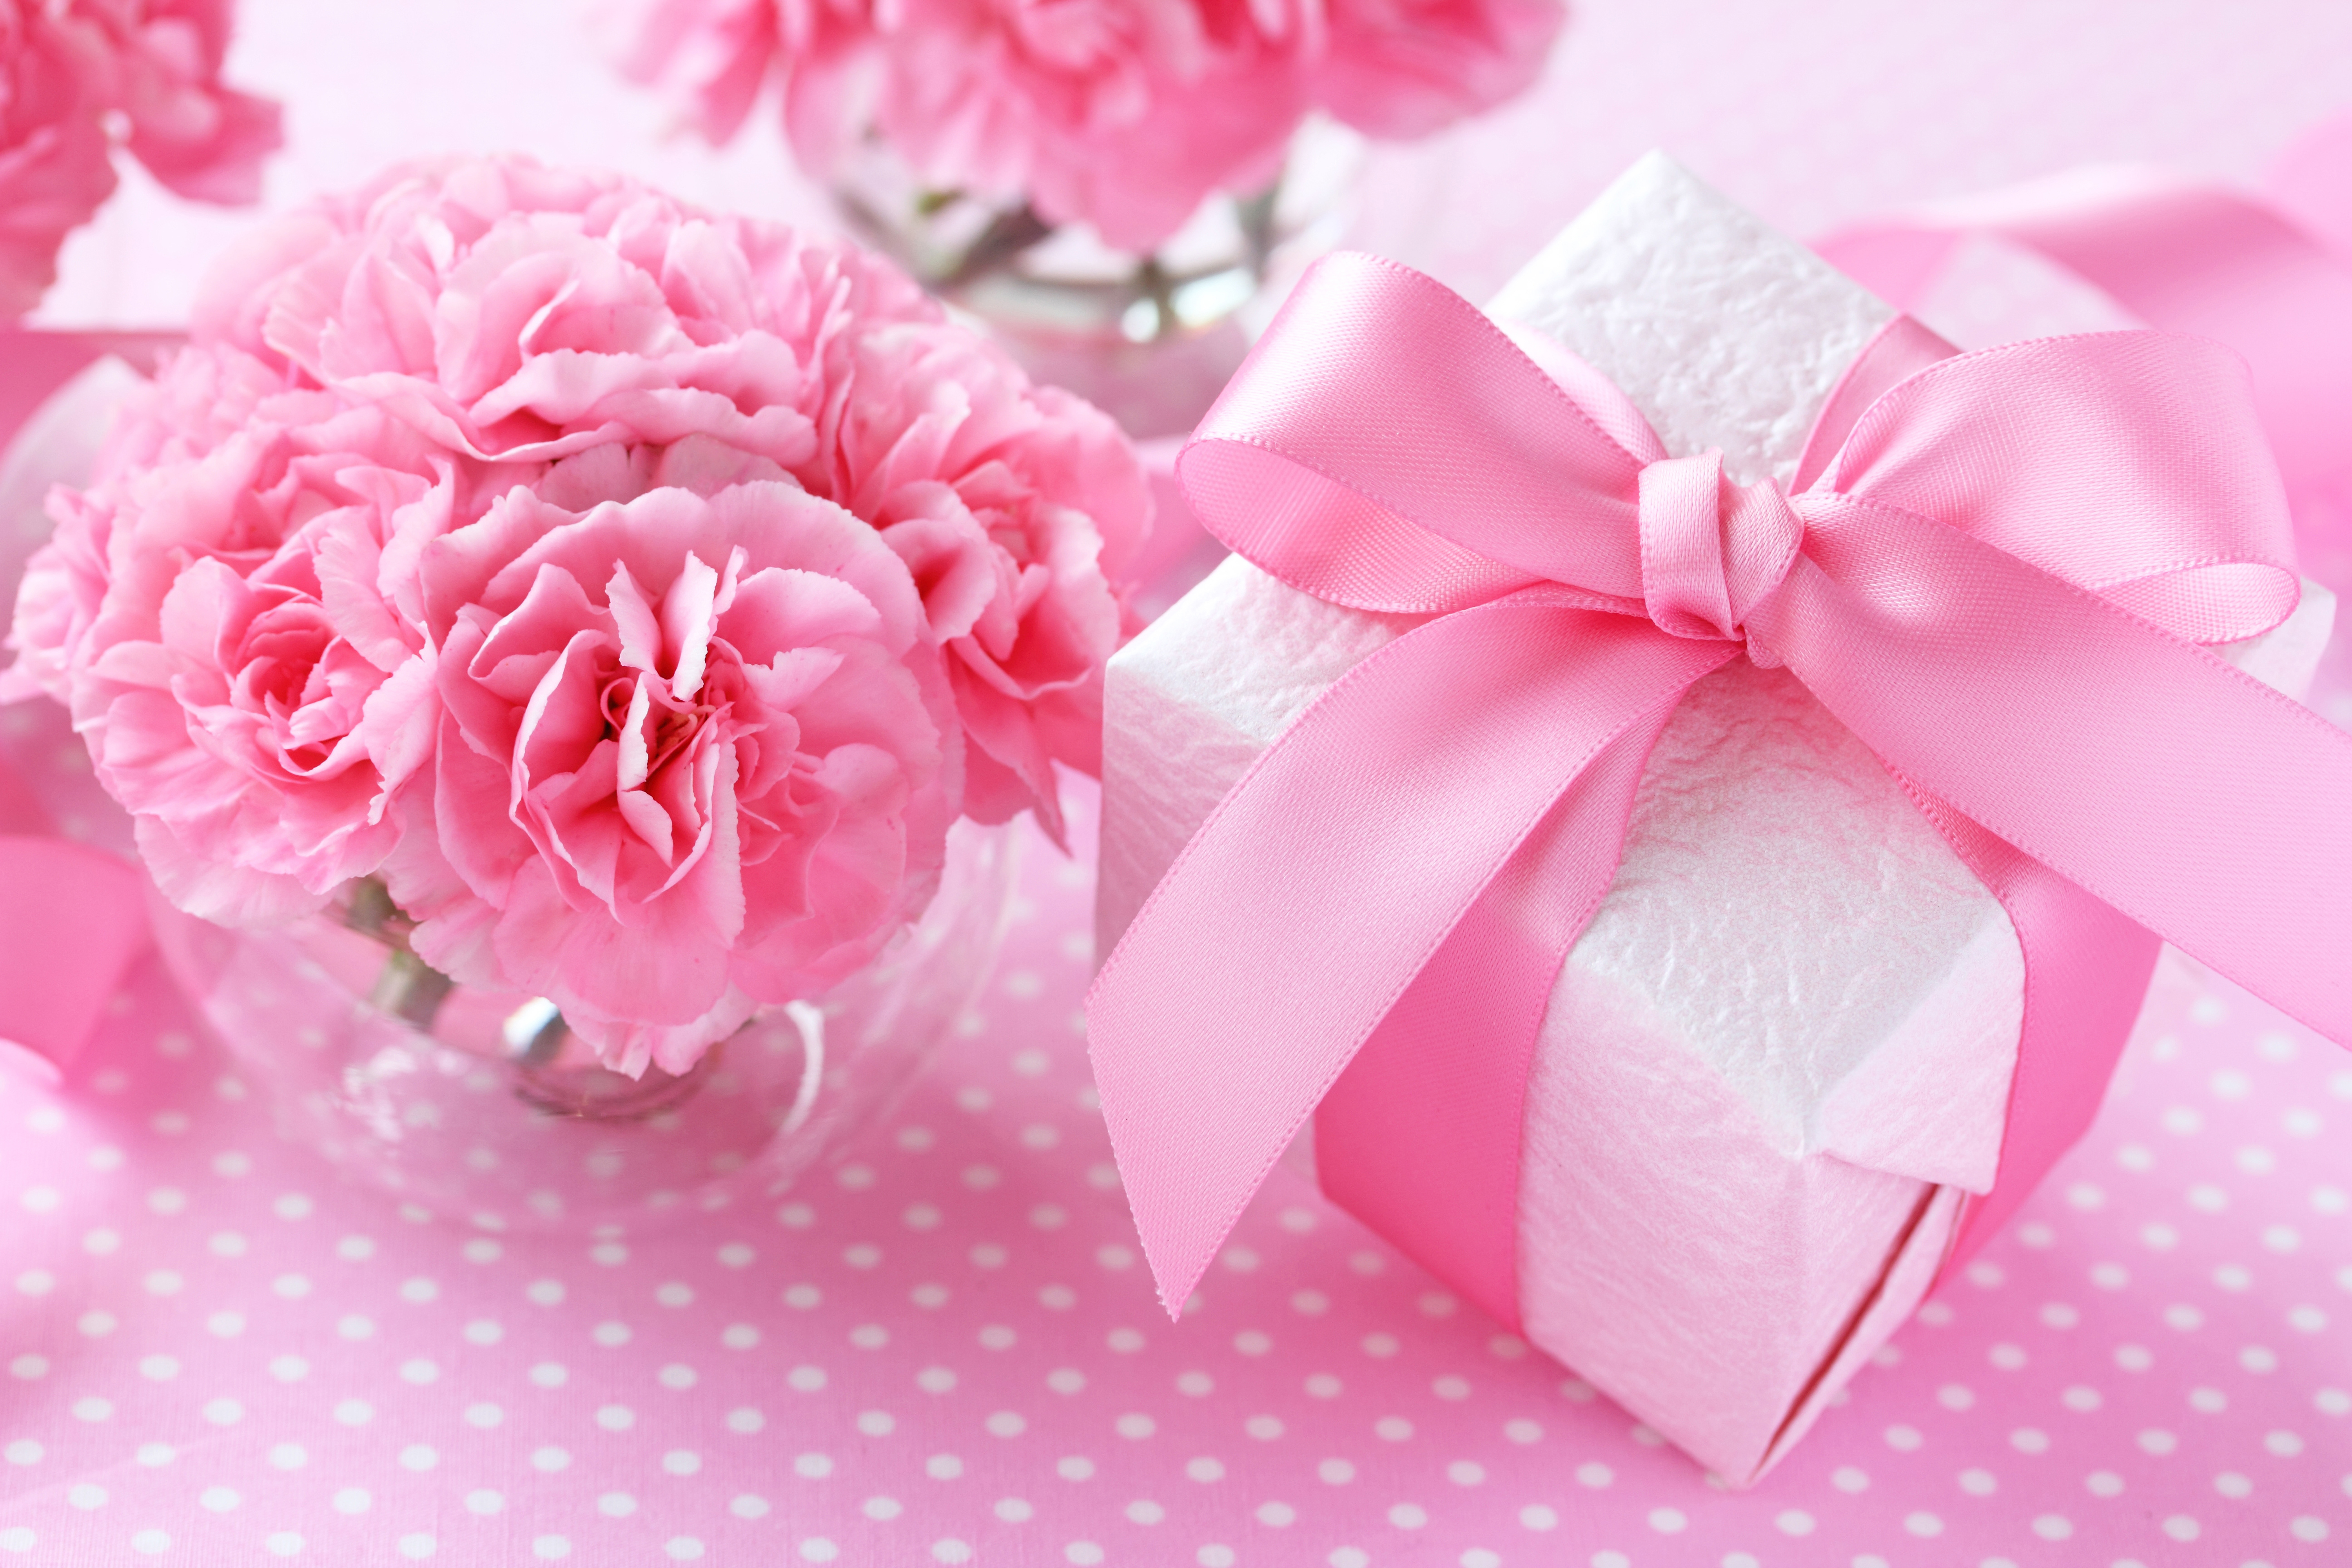 beautiful pink background designs